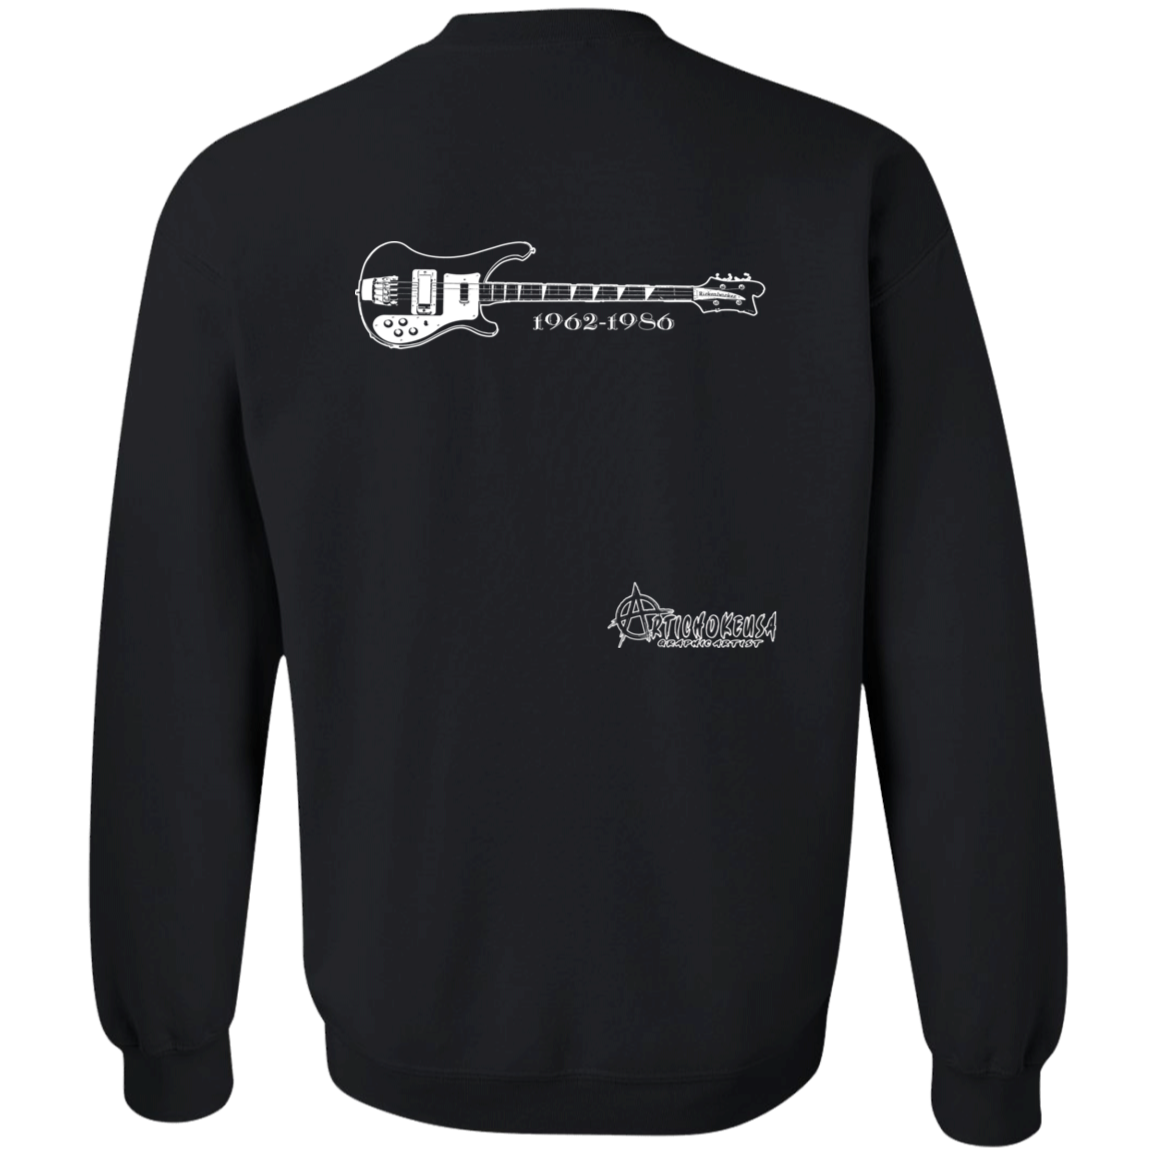 ArtichokeUSA Custom Design. Cliff Burton Tribute. Crewneck Pullover Sweatshirt